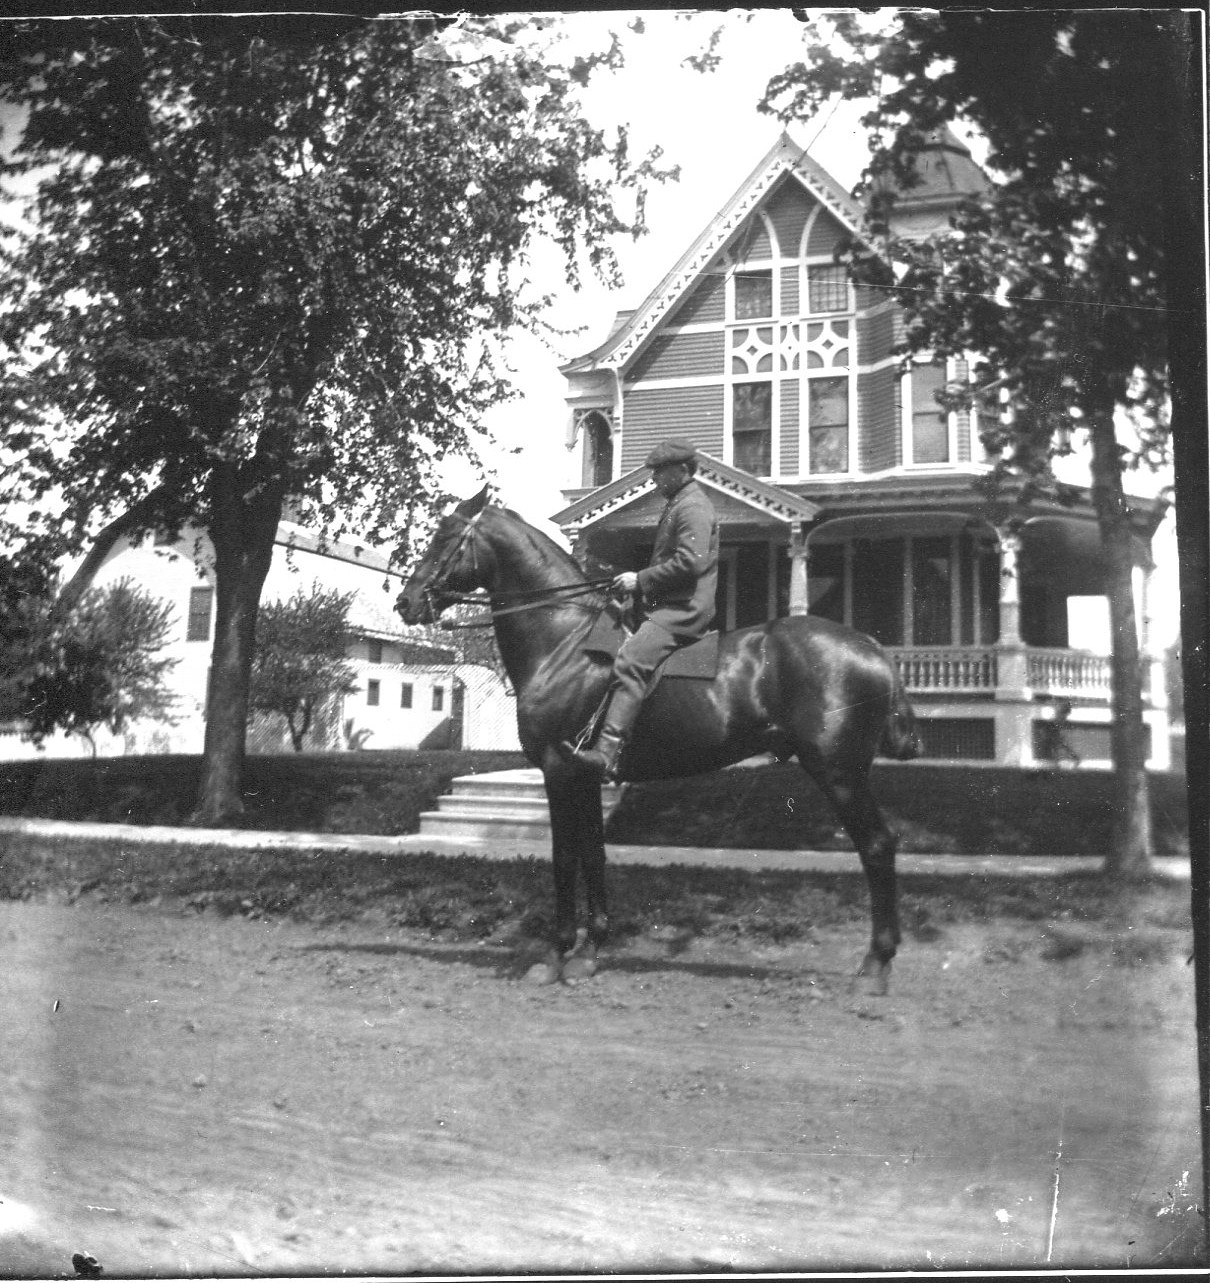 photo of Man Riding Horse